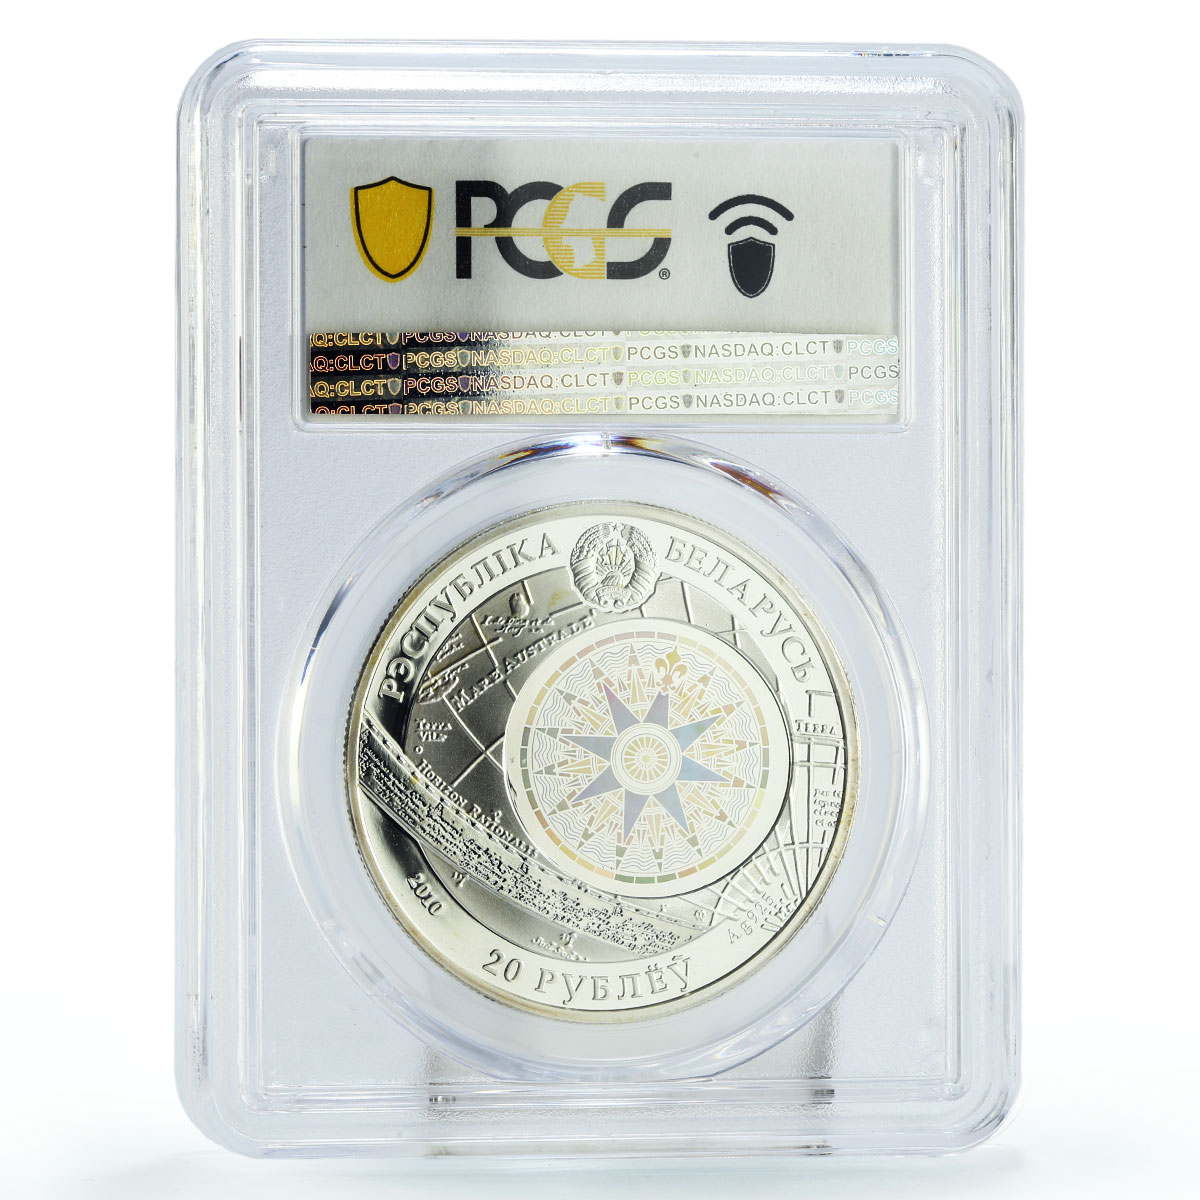 Belarus 20 rubles Constitution Ship Clipper SP69 PCGS hologram silver coin 2010